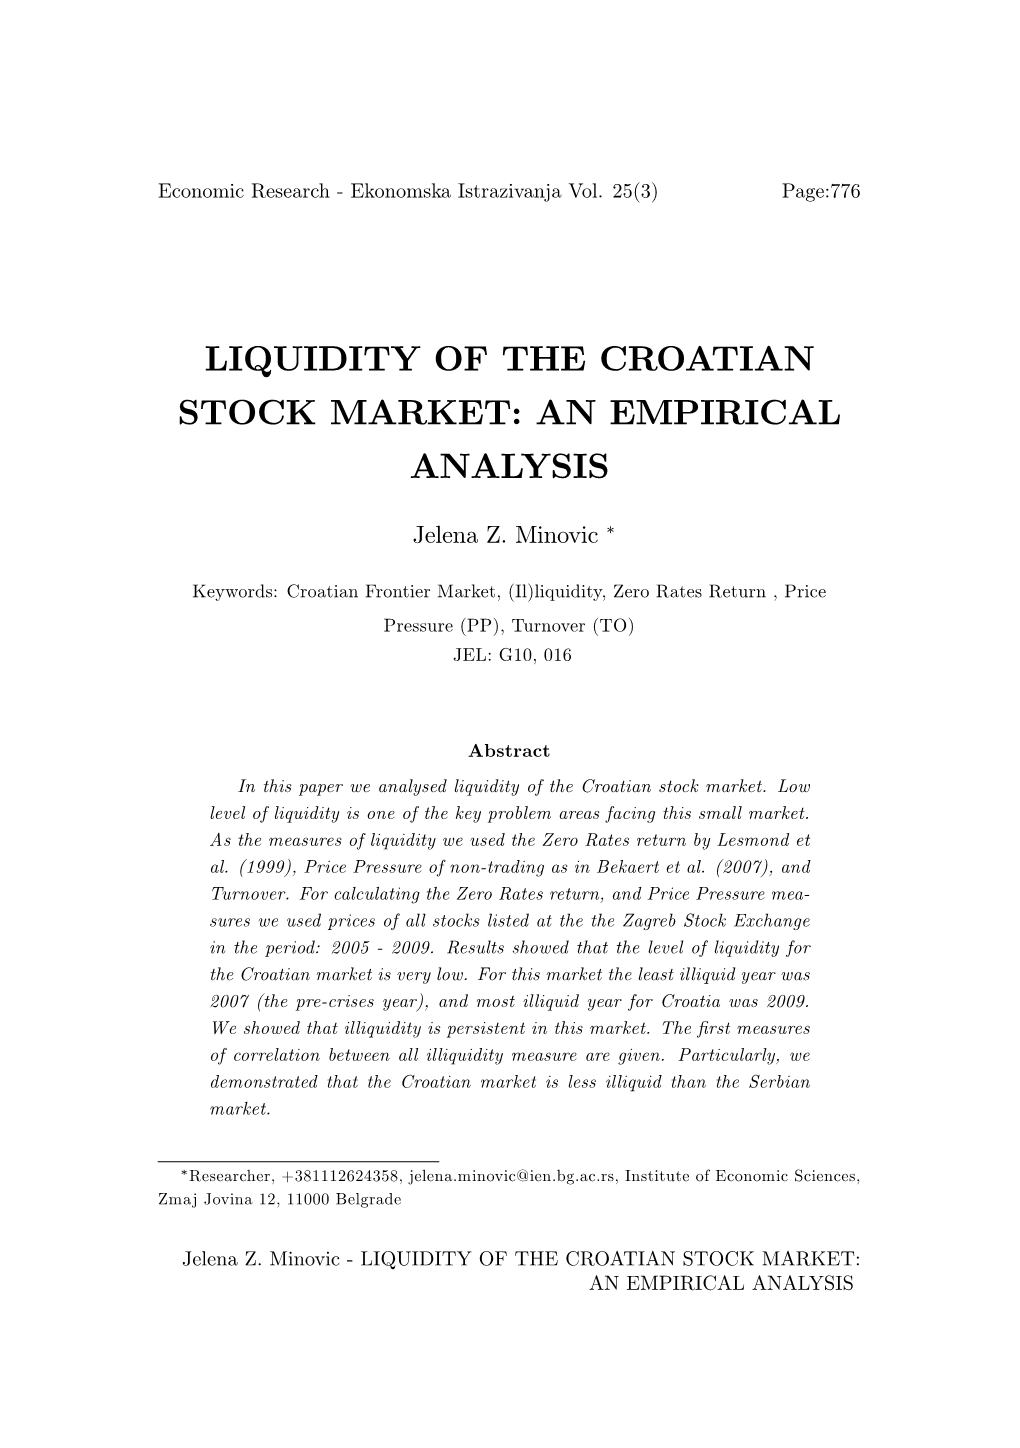 Liquidity of the Croatian Stock Market: an Empirical Analysis